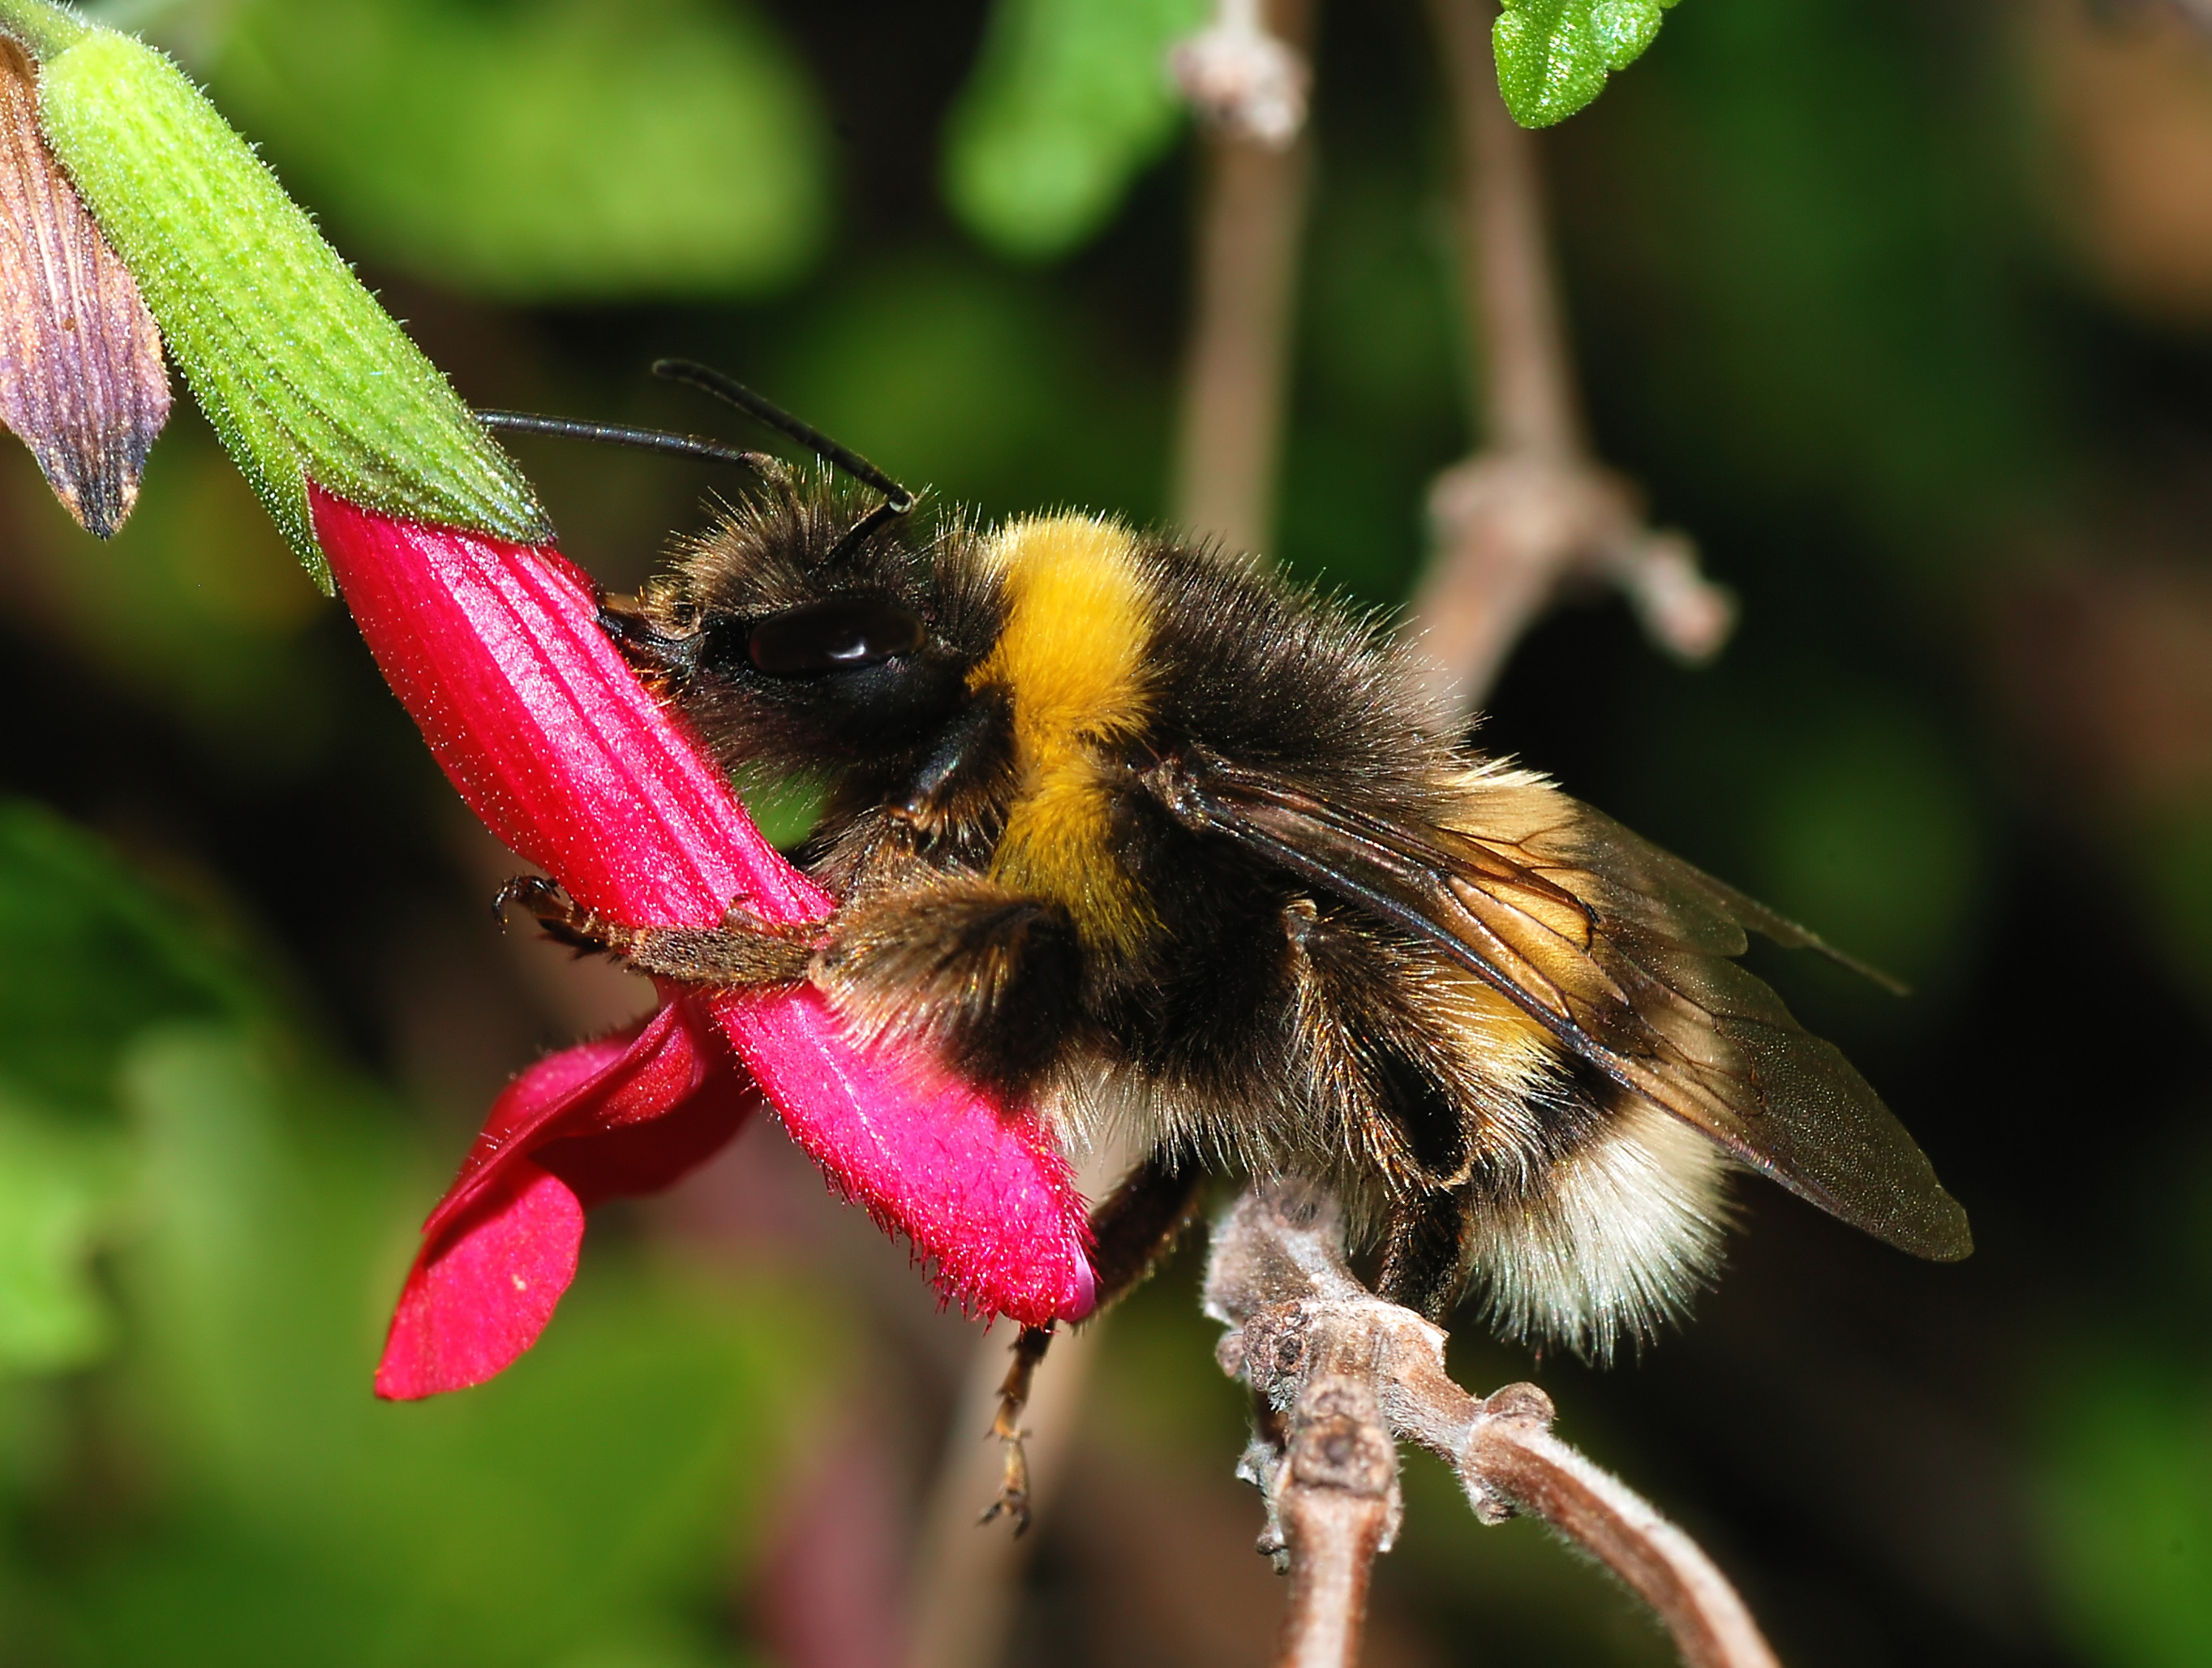 Buff-tailed Bumblebee by Alvesgaspar